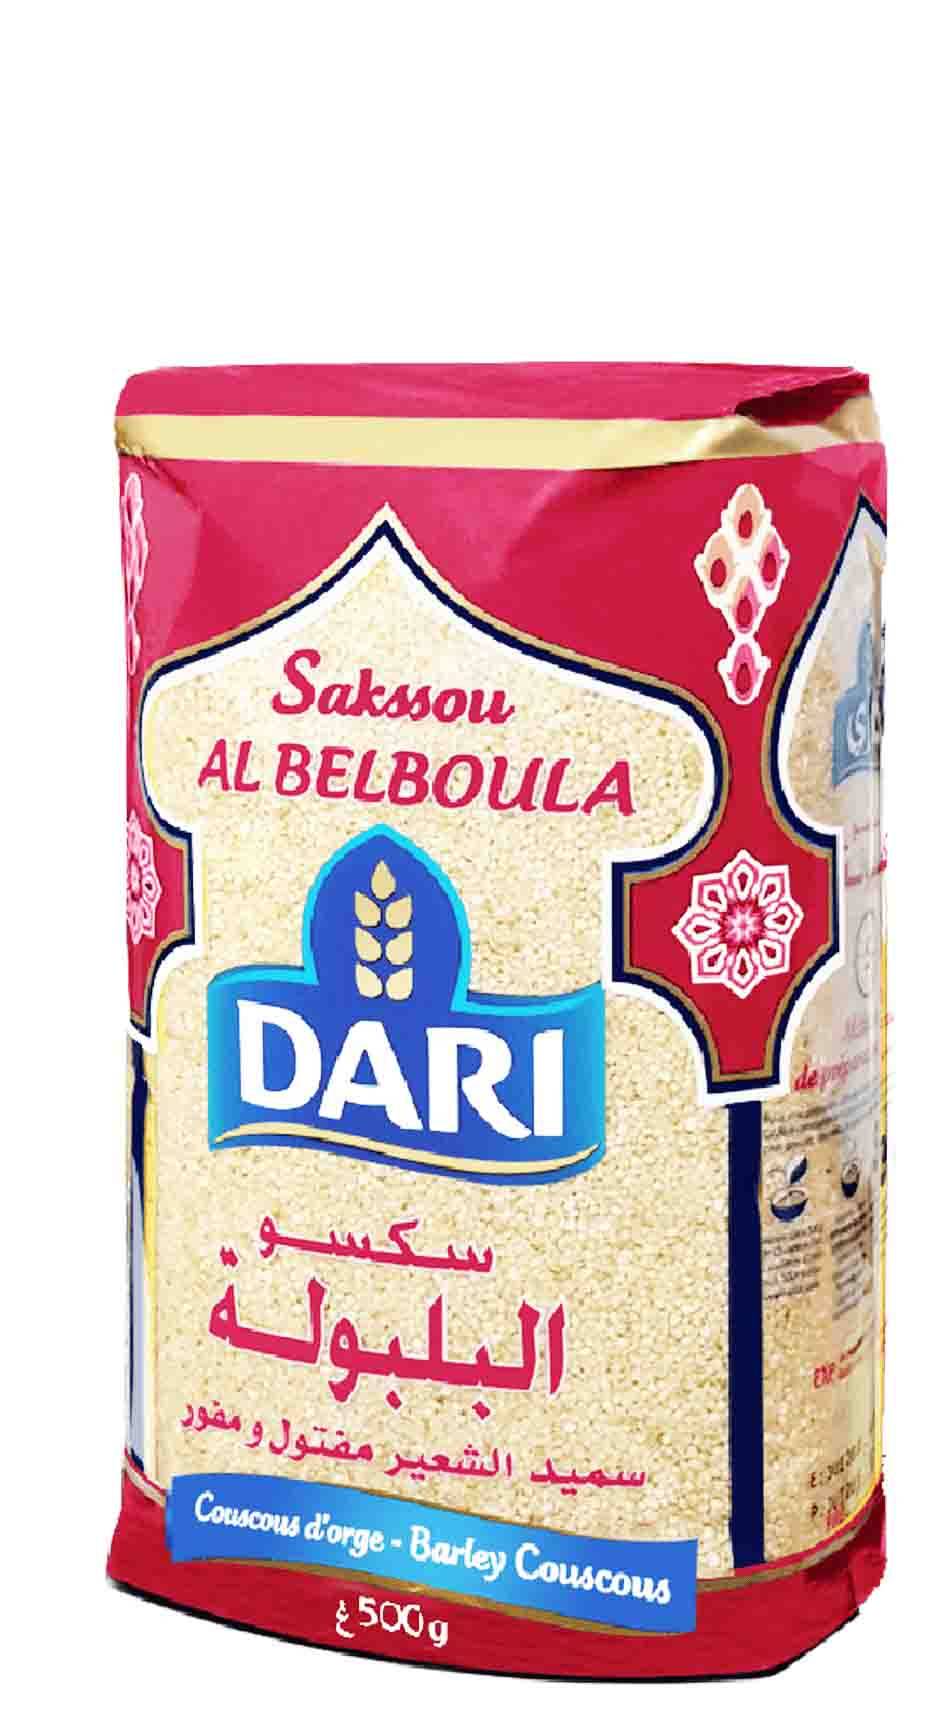 DARI Couscous Barley - Al Belboula 